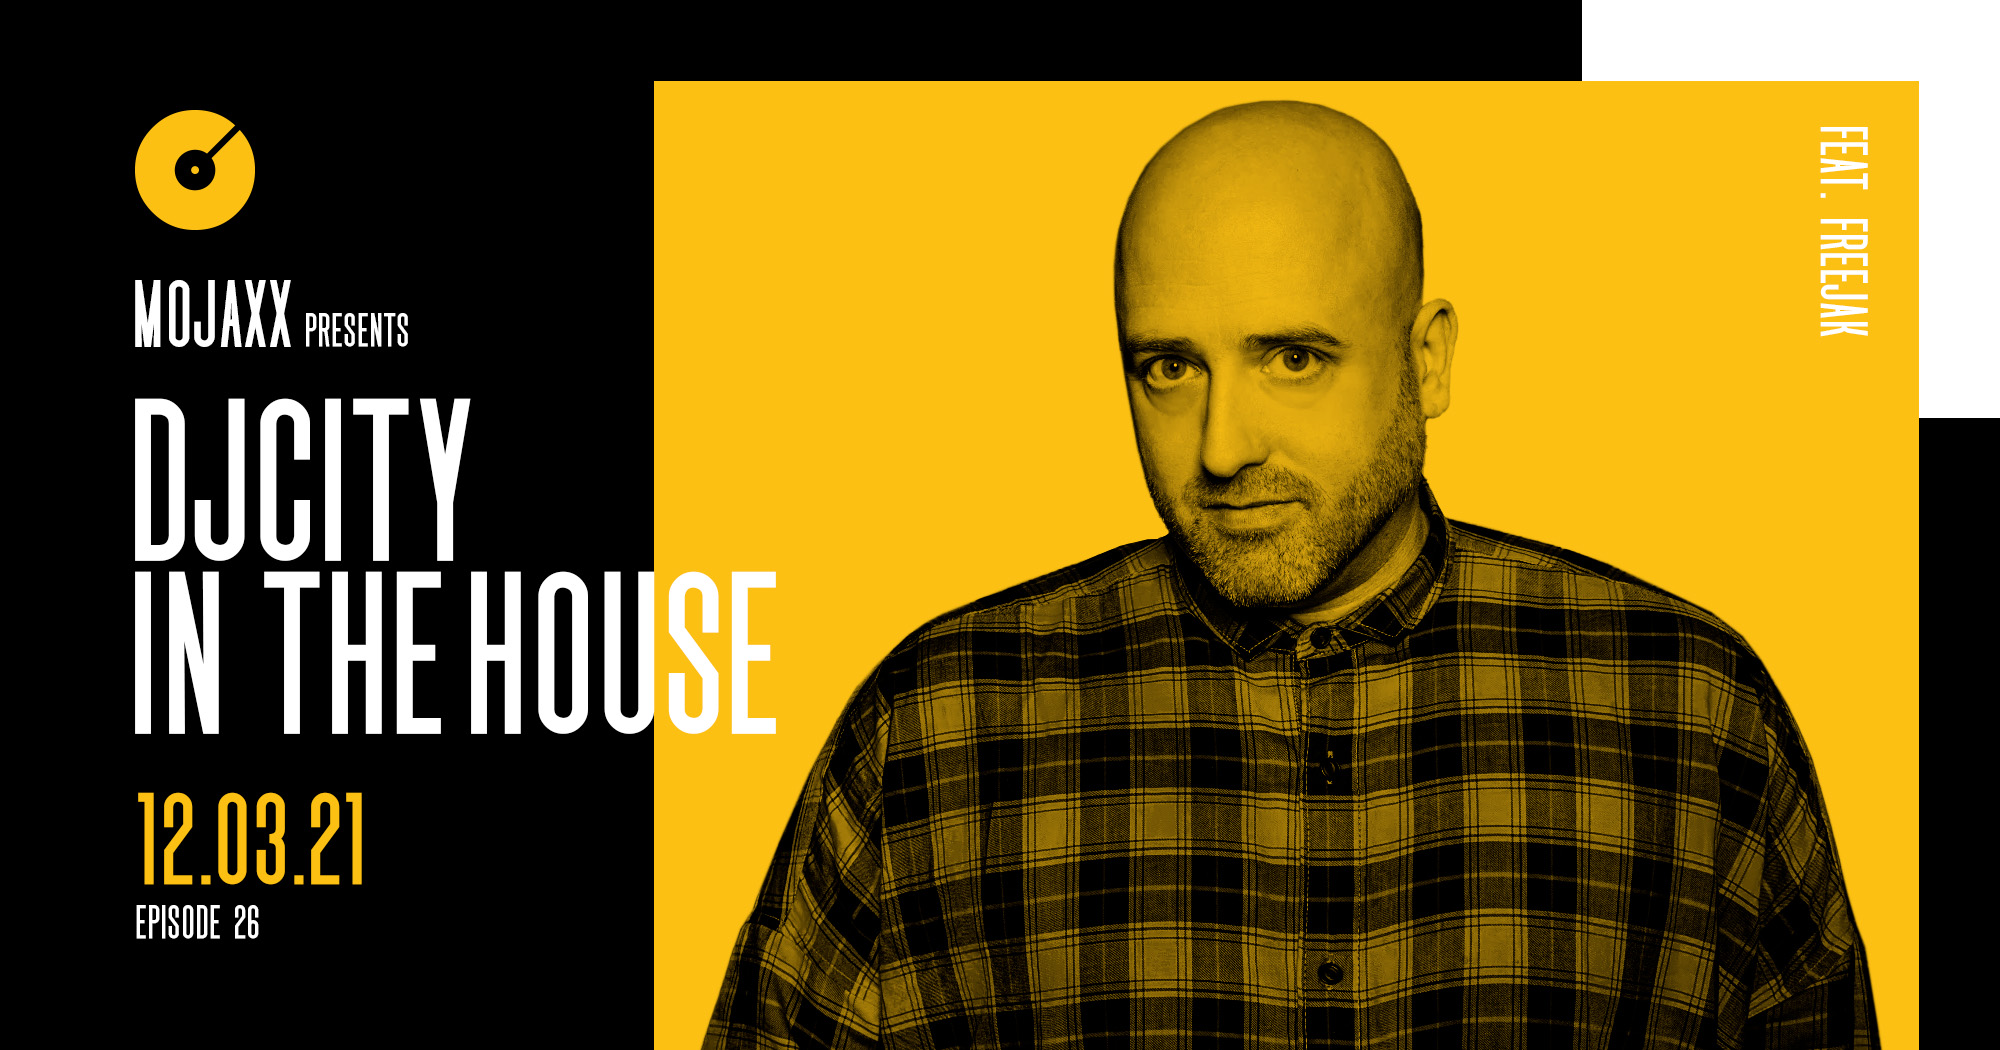 Listen to ‘DJcity in the House’ Feat. Mojaxx: December 3